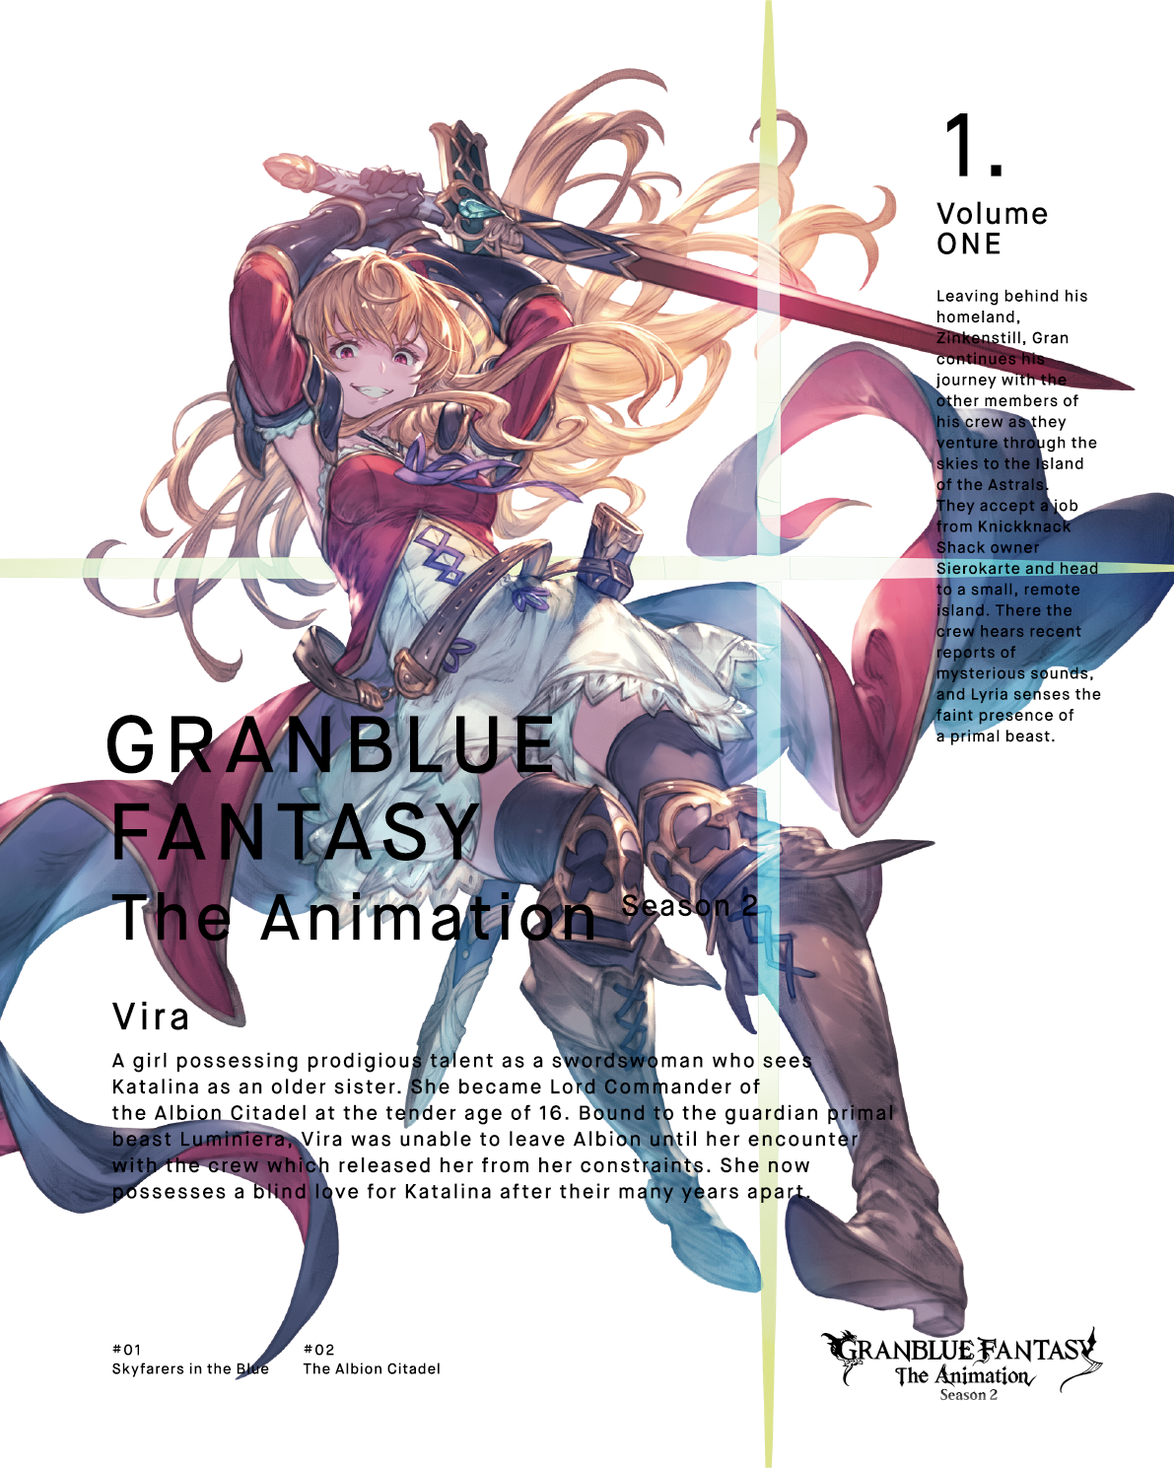 GRANBLUE FANTASY The Animation Season 2』BD&DVD第1巻描きおろし